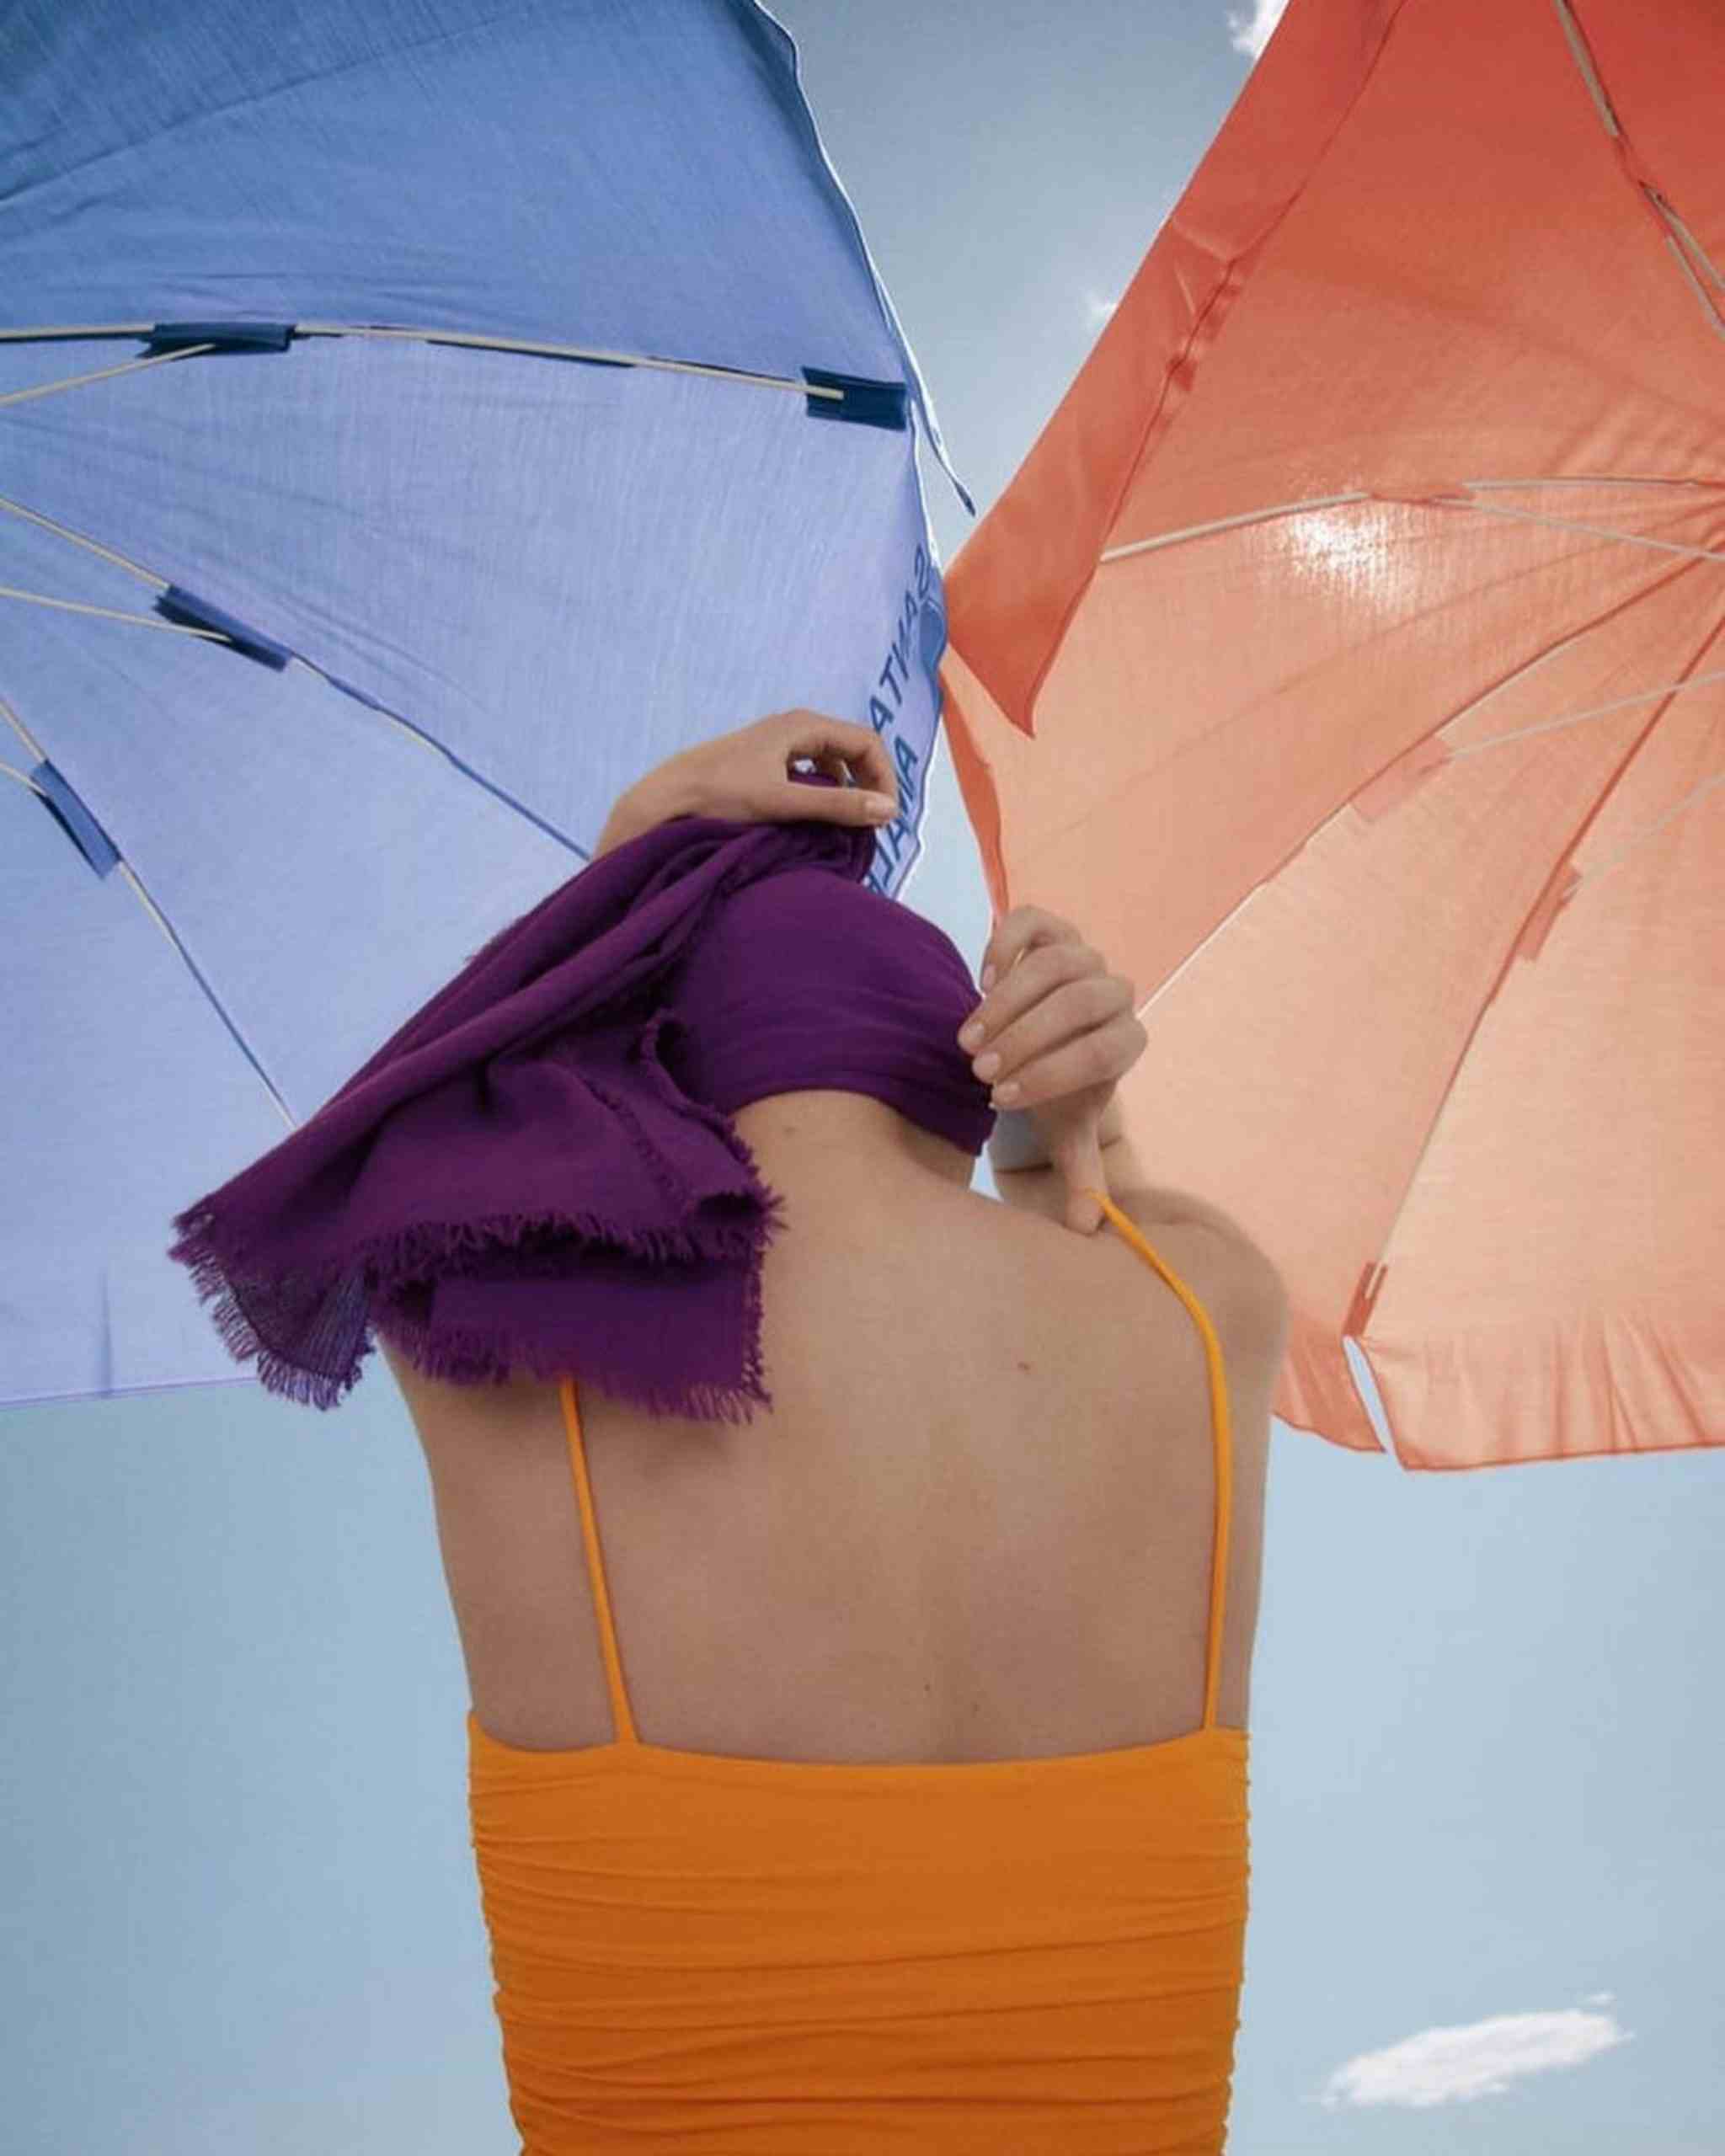 ZARA - Swimsuit Campaign '23
Photographer: Bibi Borthwick
